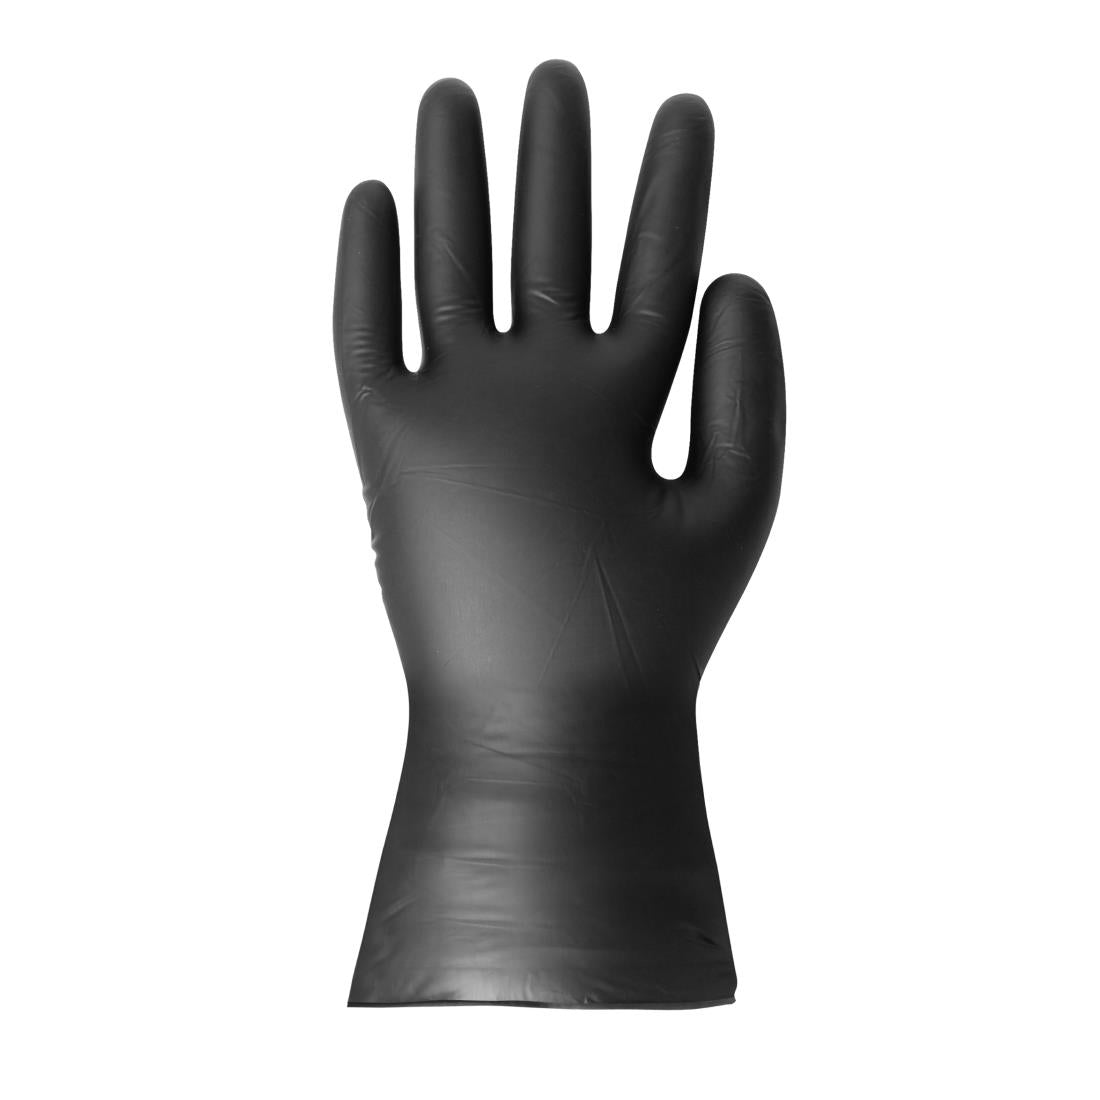 FJ748-XL Hygiplas Vinyl Black Powder Free Glove XL - pack 100 JD Catering Equipment Solutions Ltd